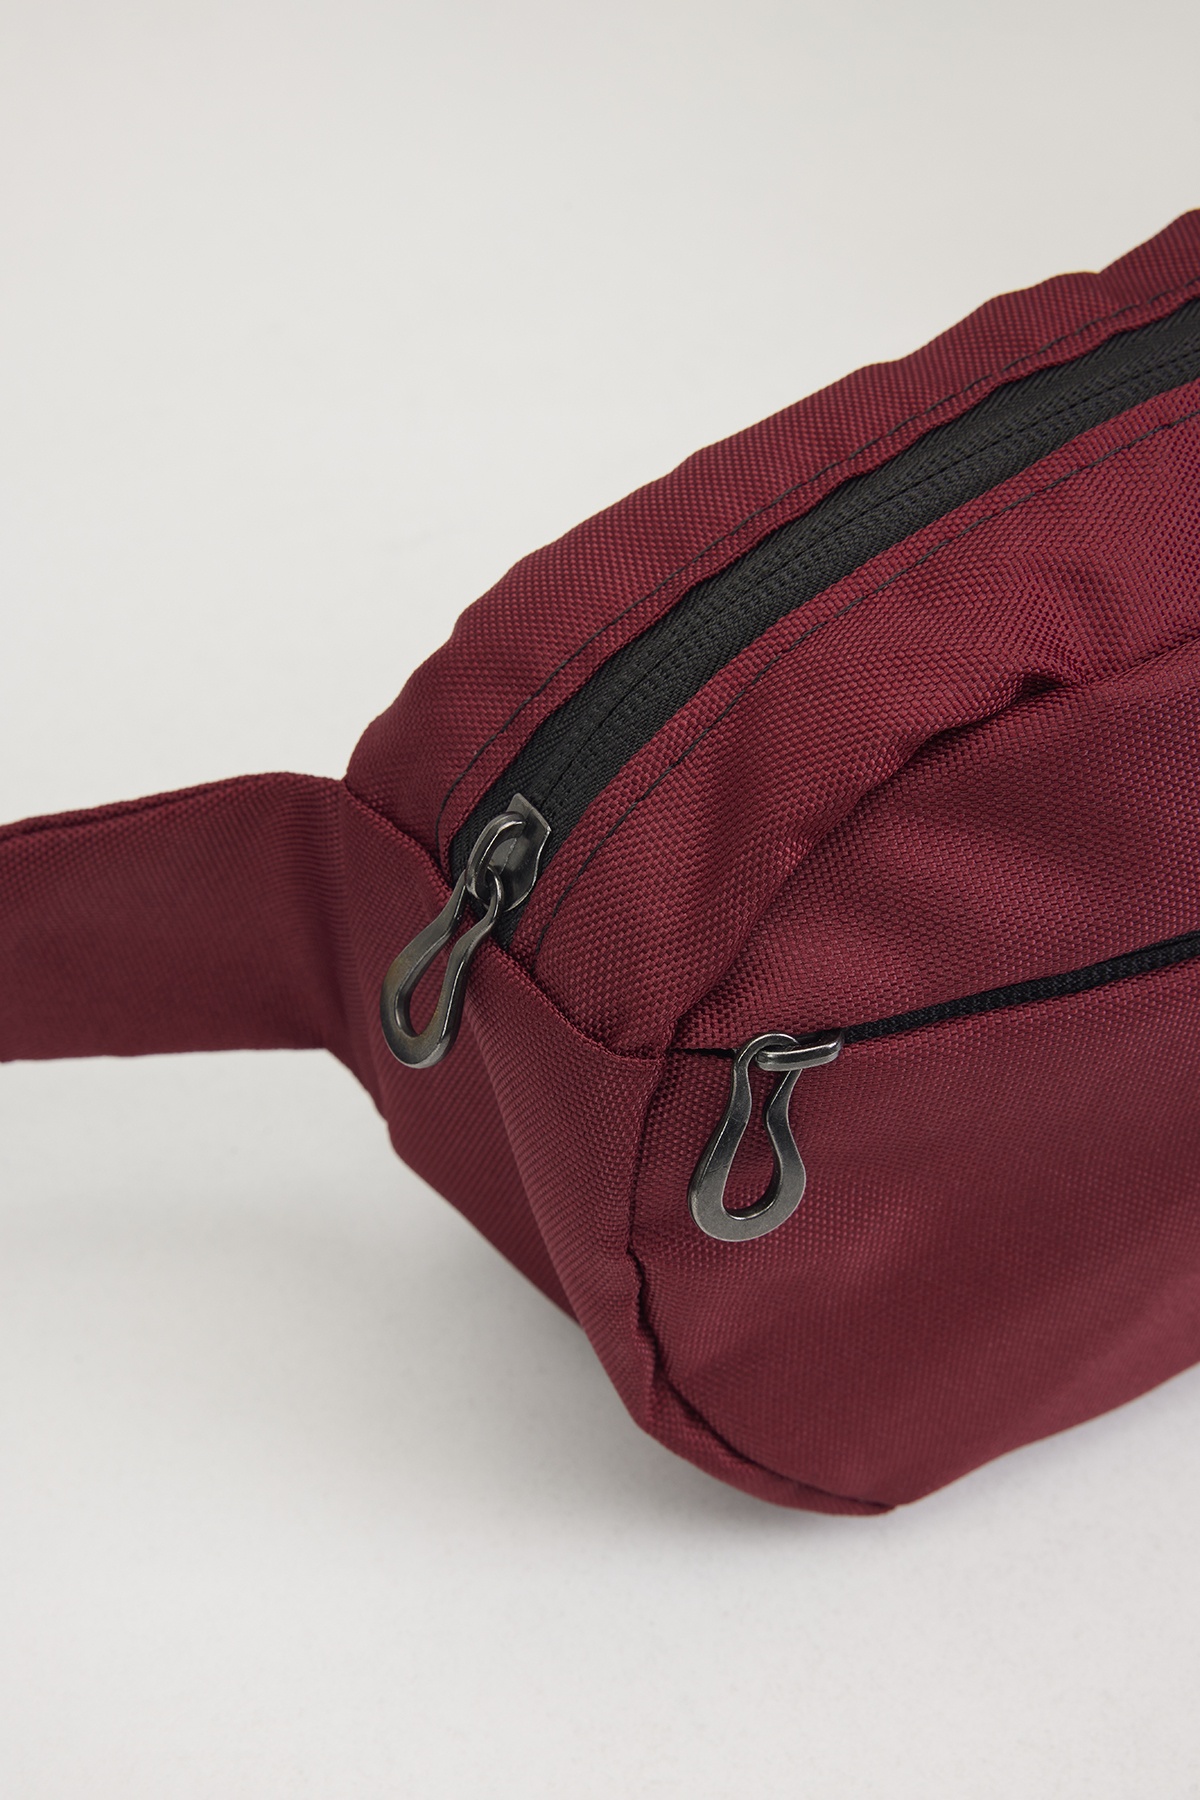 Textured Claret Red Bag